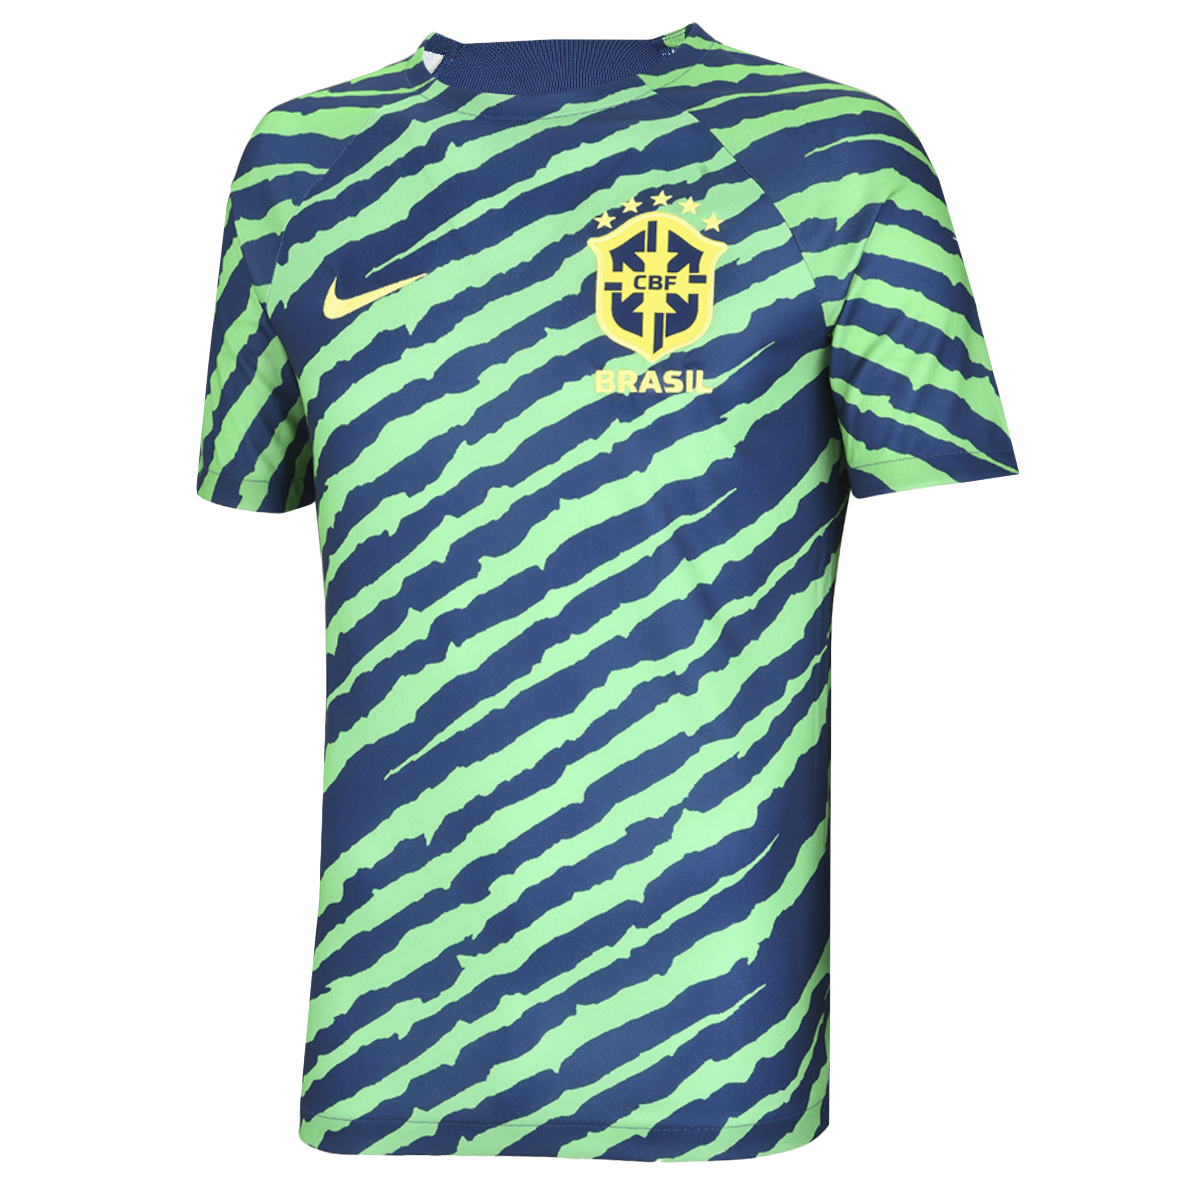 Camiseta Futbol Brasil